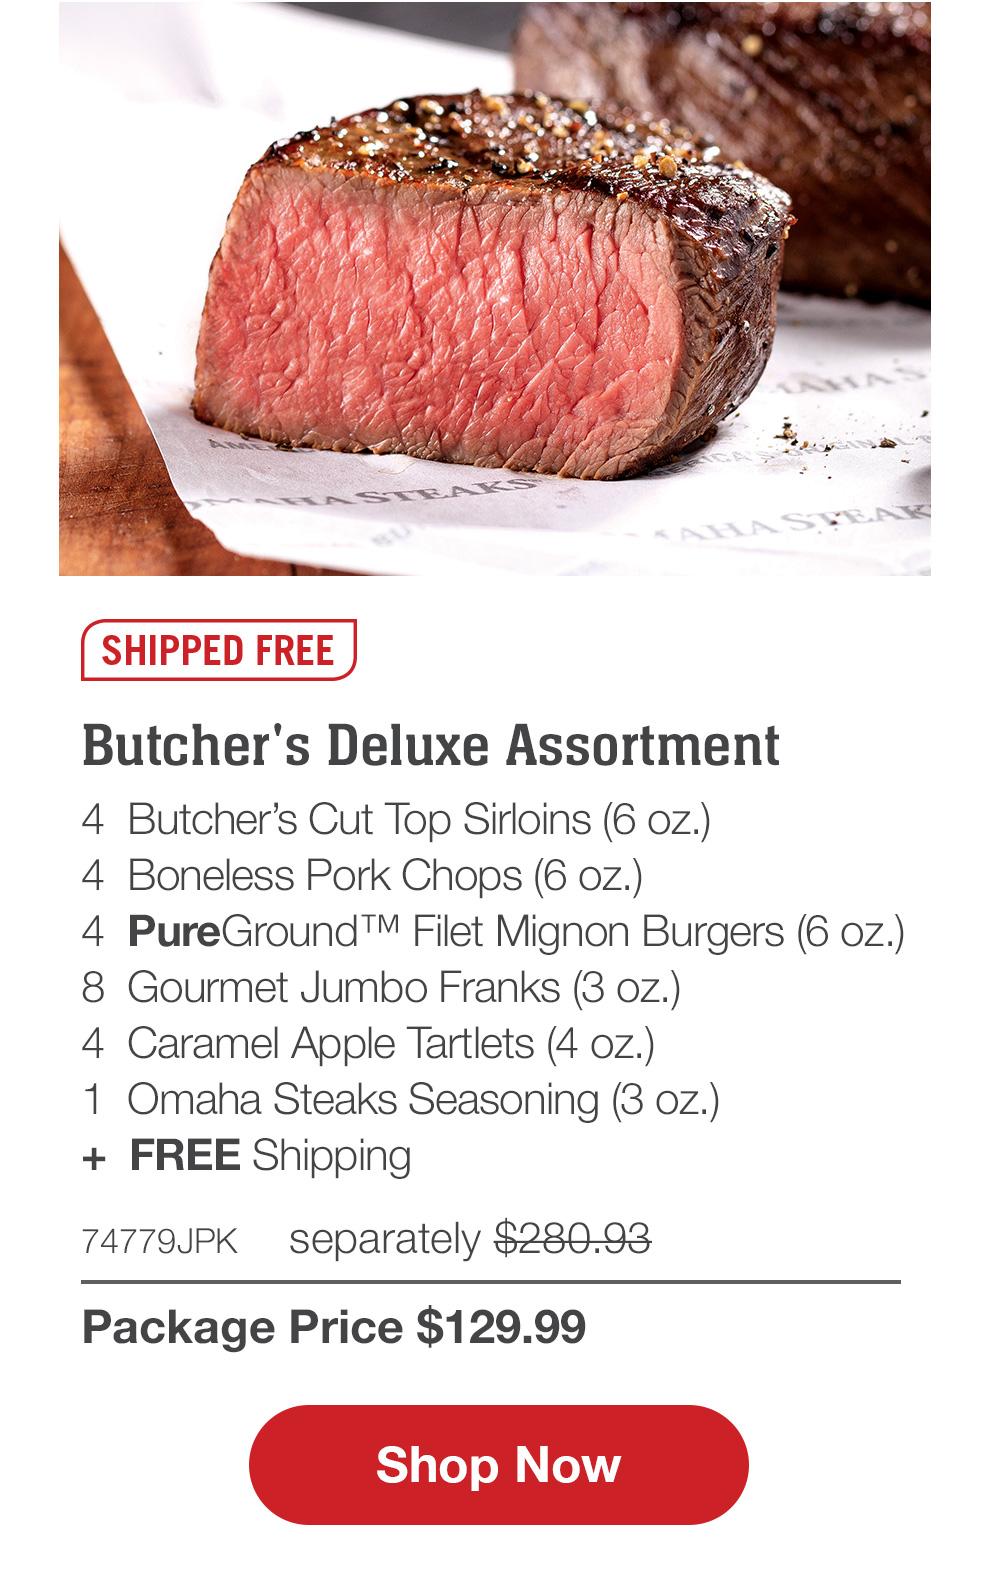 SHIPPED FREE | Butcher's Deluxe Assortment - 4 Butcher's Cut Top Sirloins (6 oz.) - 4 Boneless Pork Chops (6 oz.) - 4 PureGround™ Filet Mignon Burgers (6 oz.) - 8 Gourmet Jumbo Franks (3 oz.) - 4 Caramel Apple Tartlets (4 oz.) - 1 Omaha Steaks Seasoning (3 oz.) - 74779JPK separately $280.93 | Package Price $129.99 || SHOP NOW